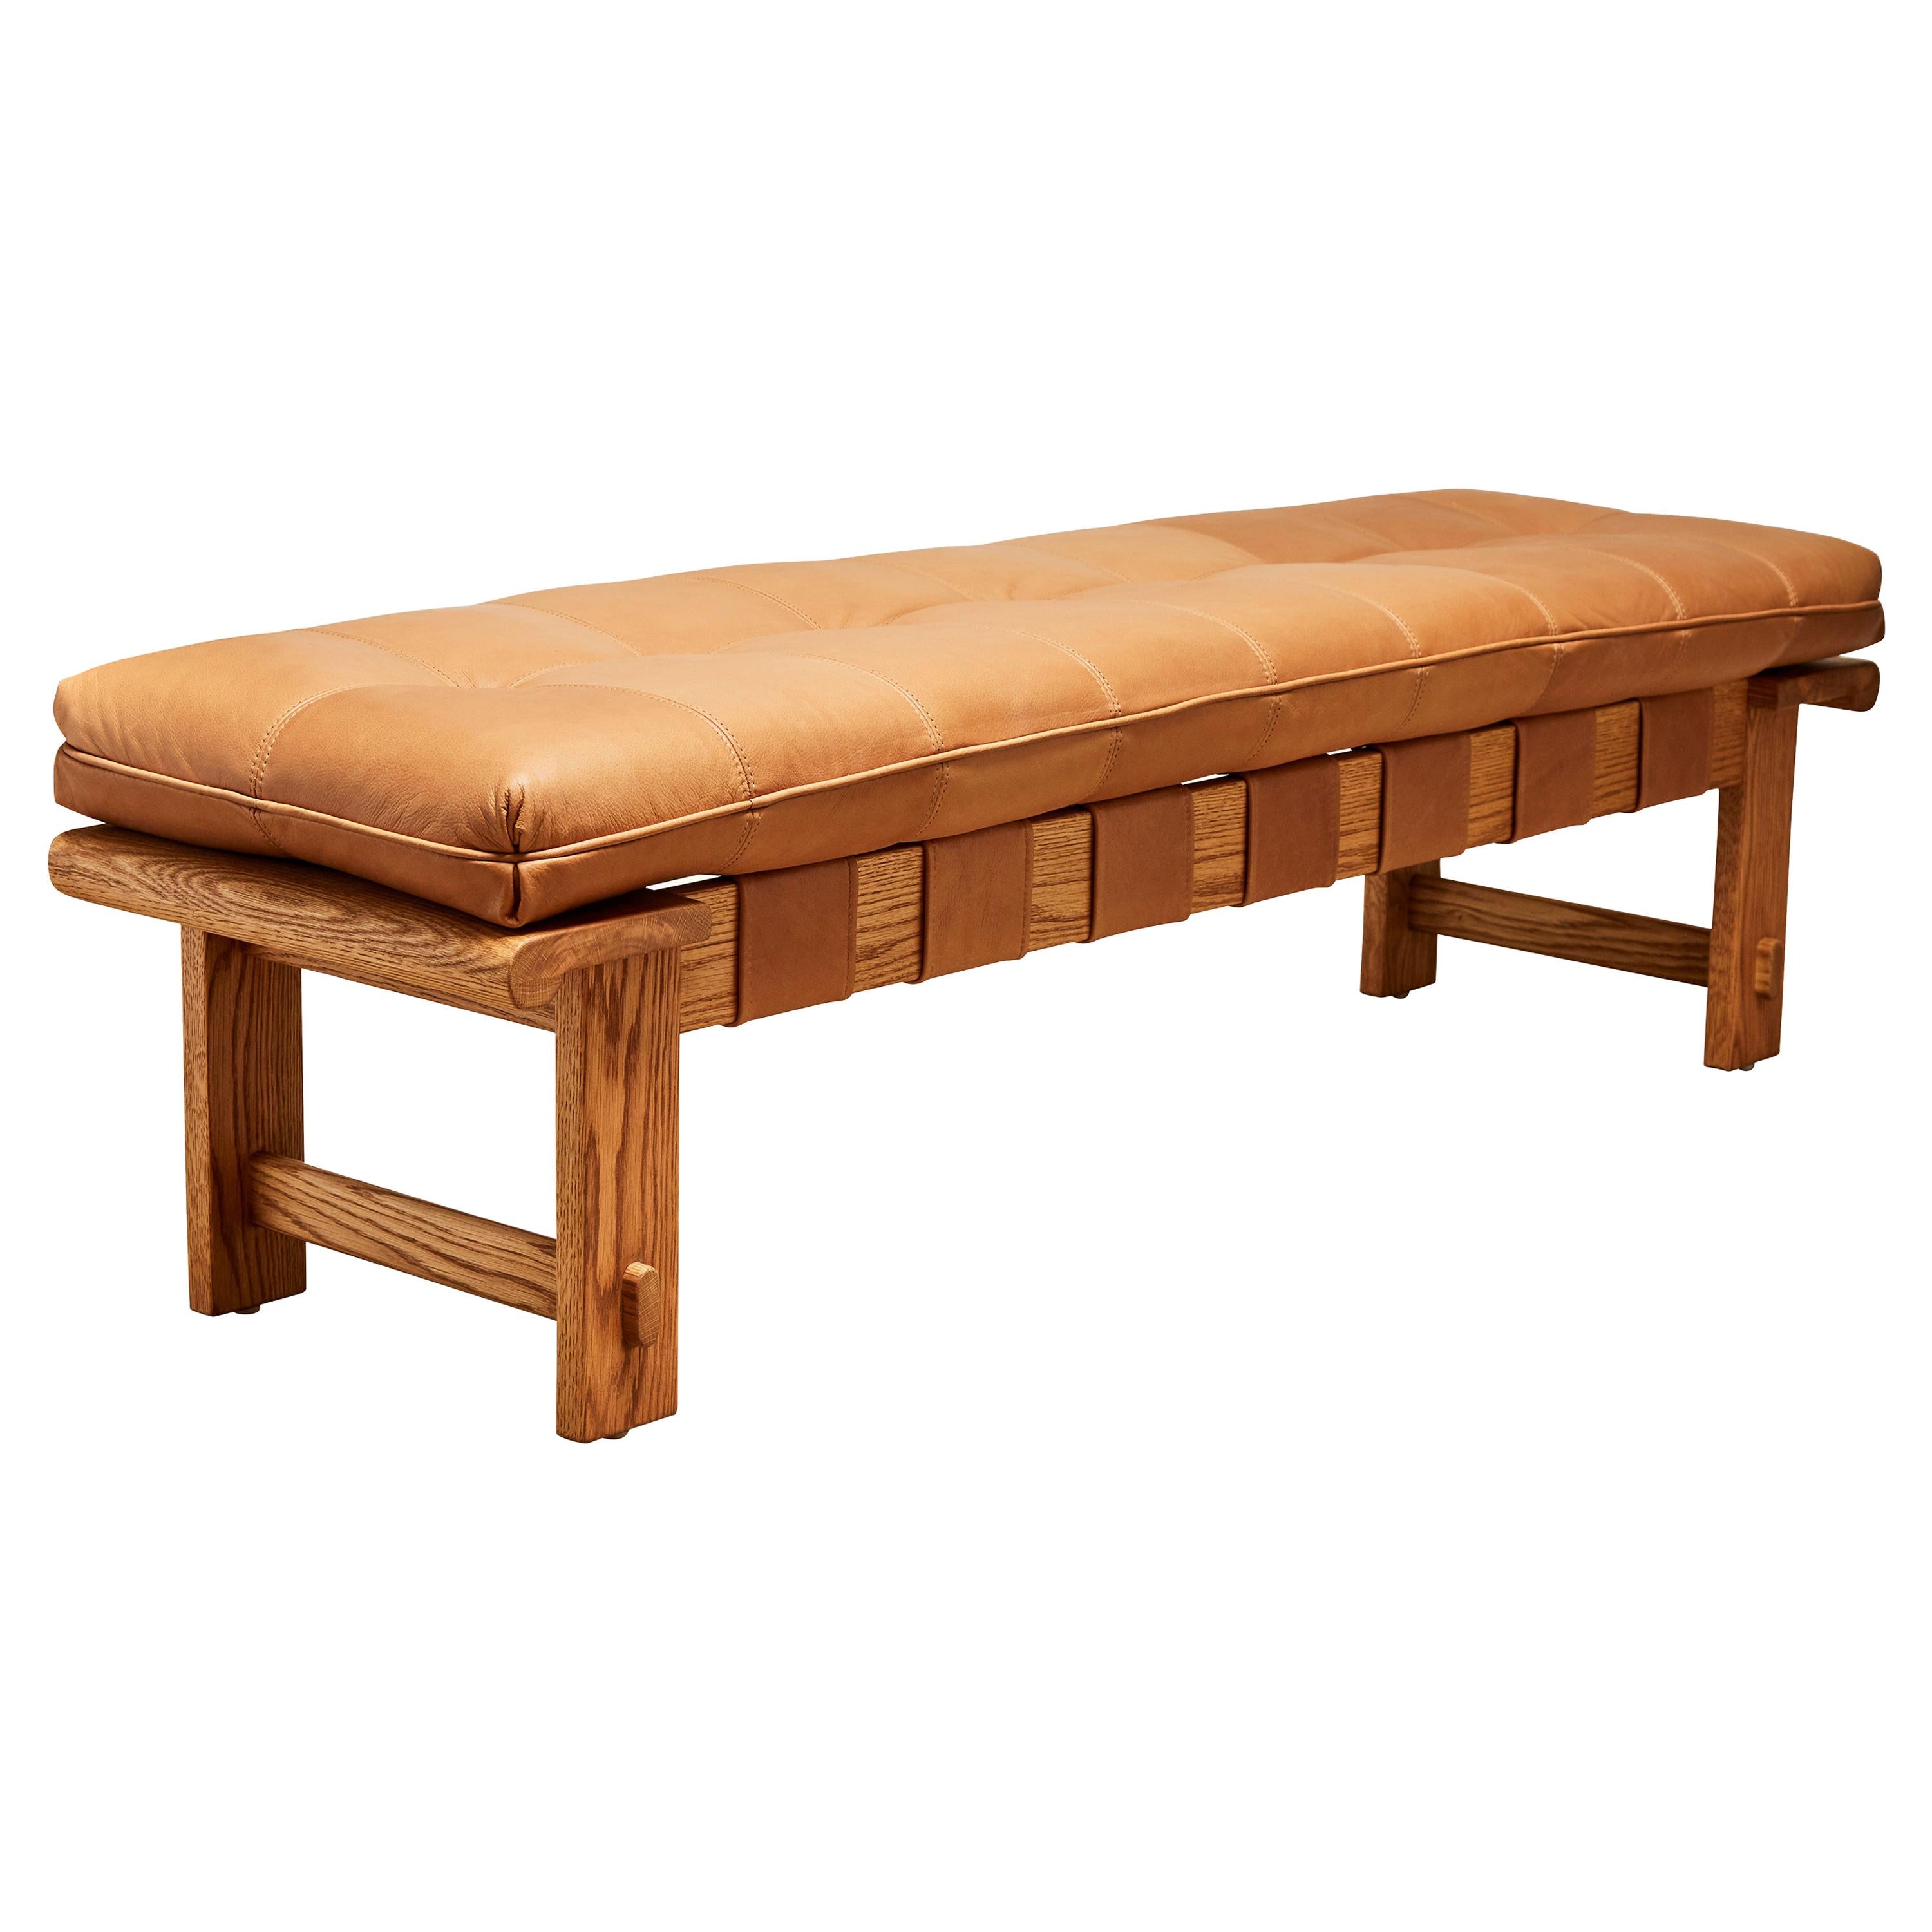 Mid-Century Modern Oak and Tan Leather Ojai Bench by Lawson-Fenning